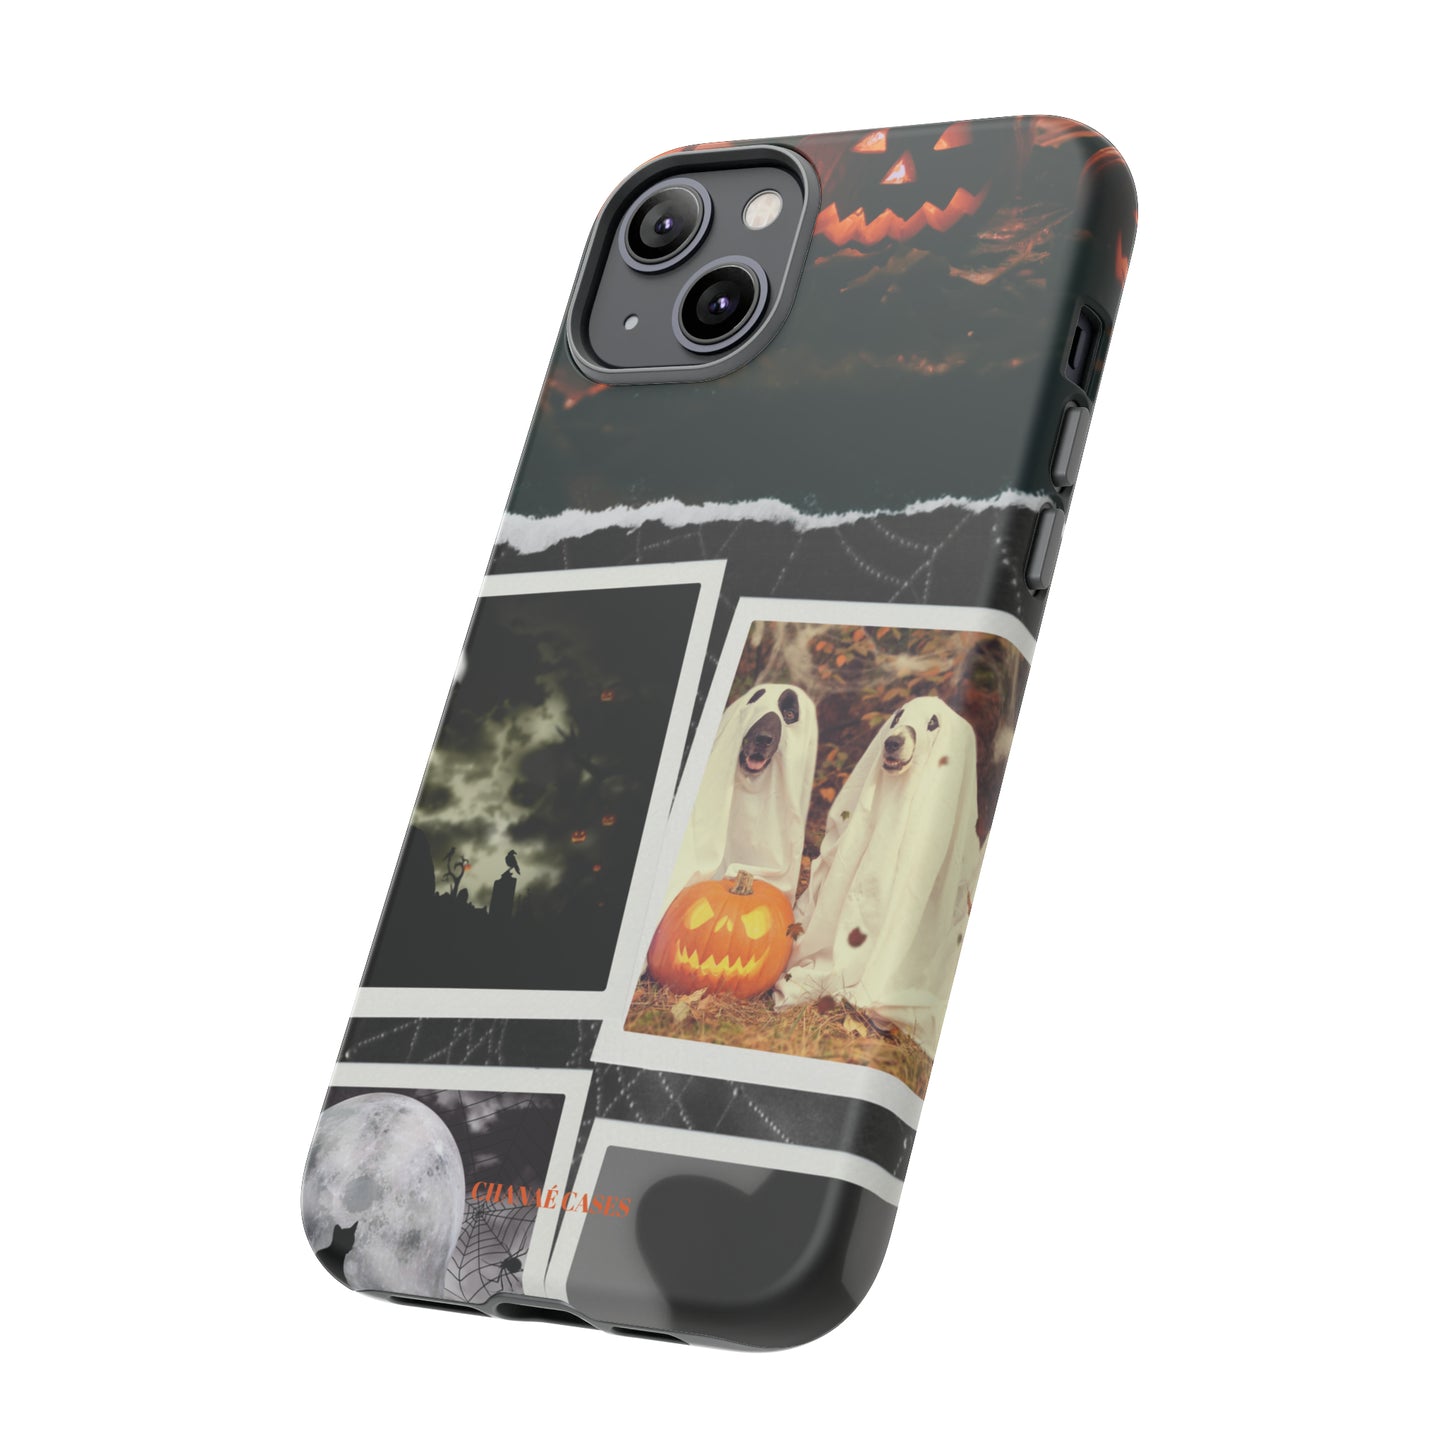 Spooky Aesthetic iPhone "Tough" Case (Dark)